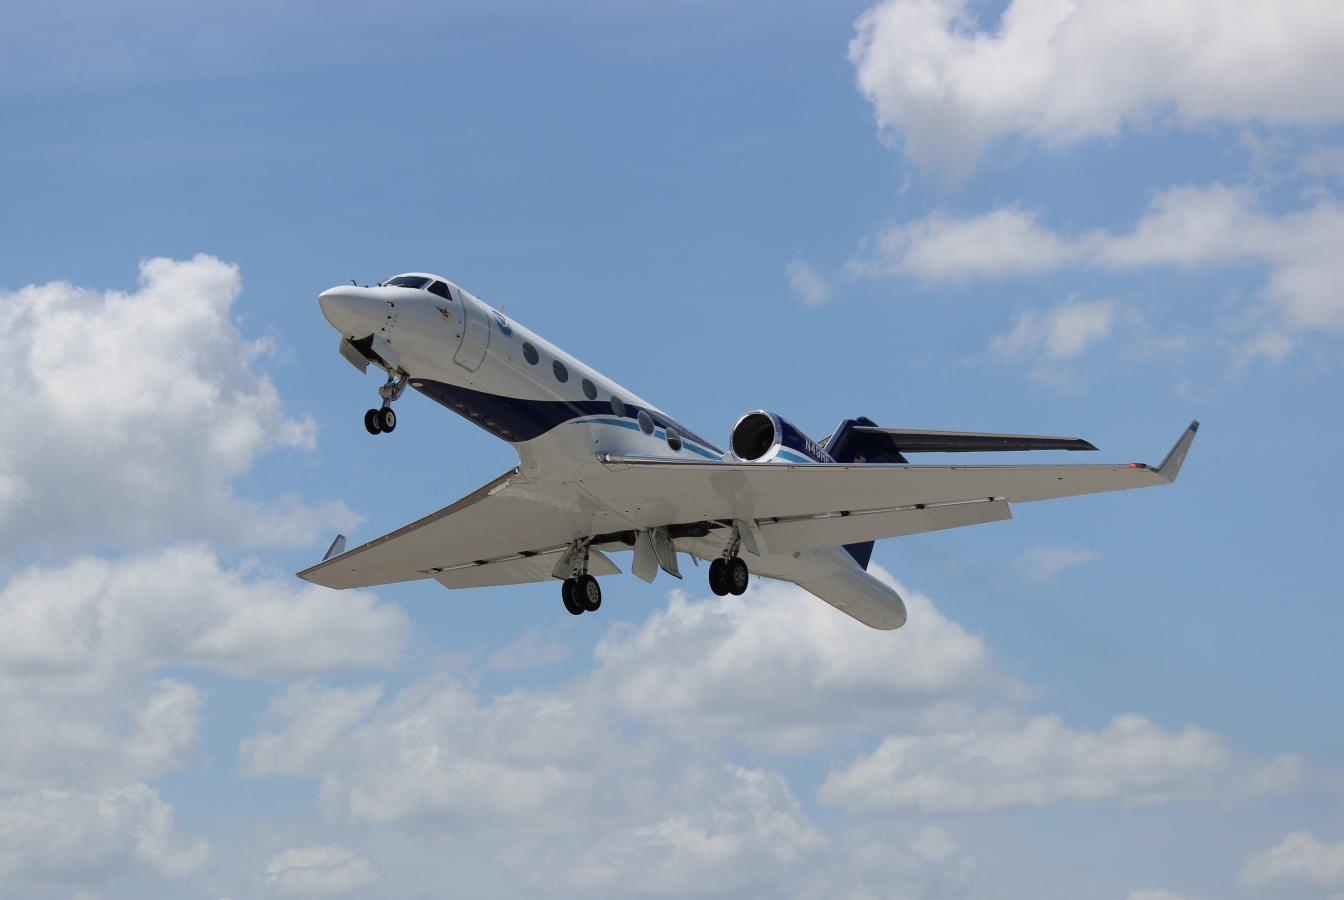 NOAA Gulfstream IV-SP taking off from Lakeland Linder Regional Airport